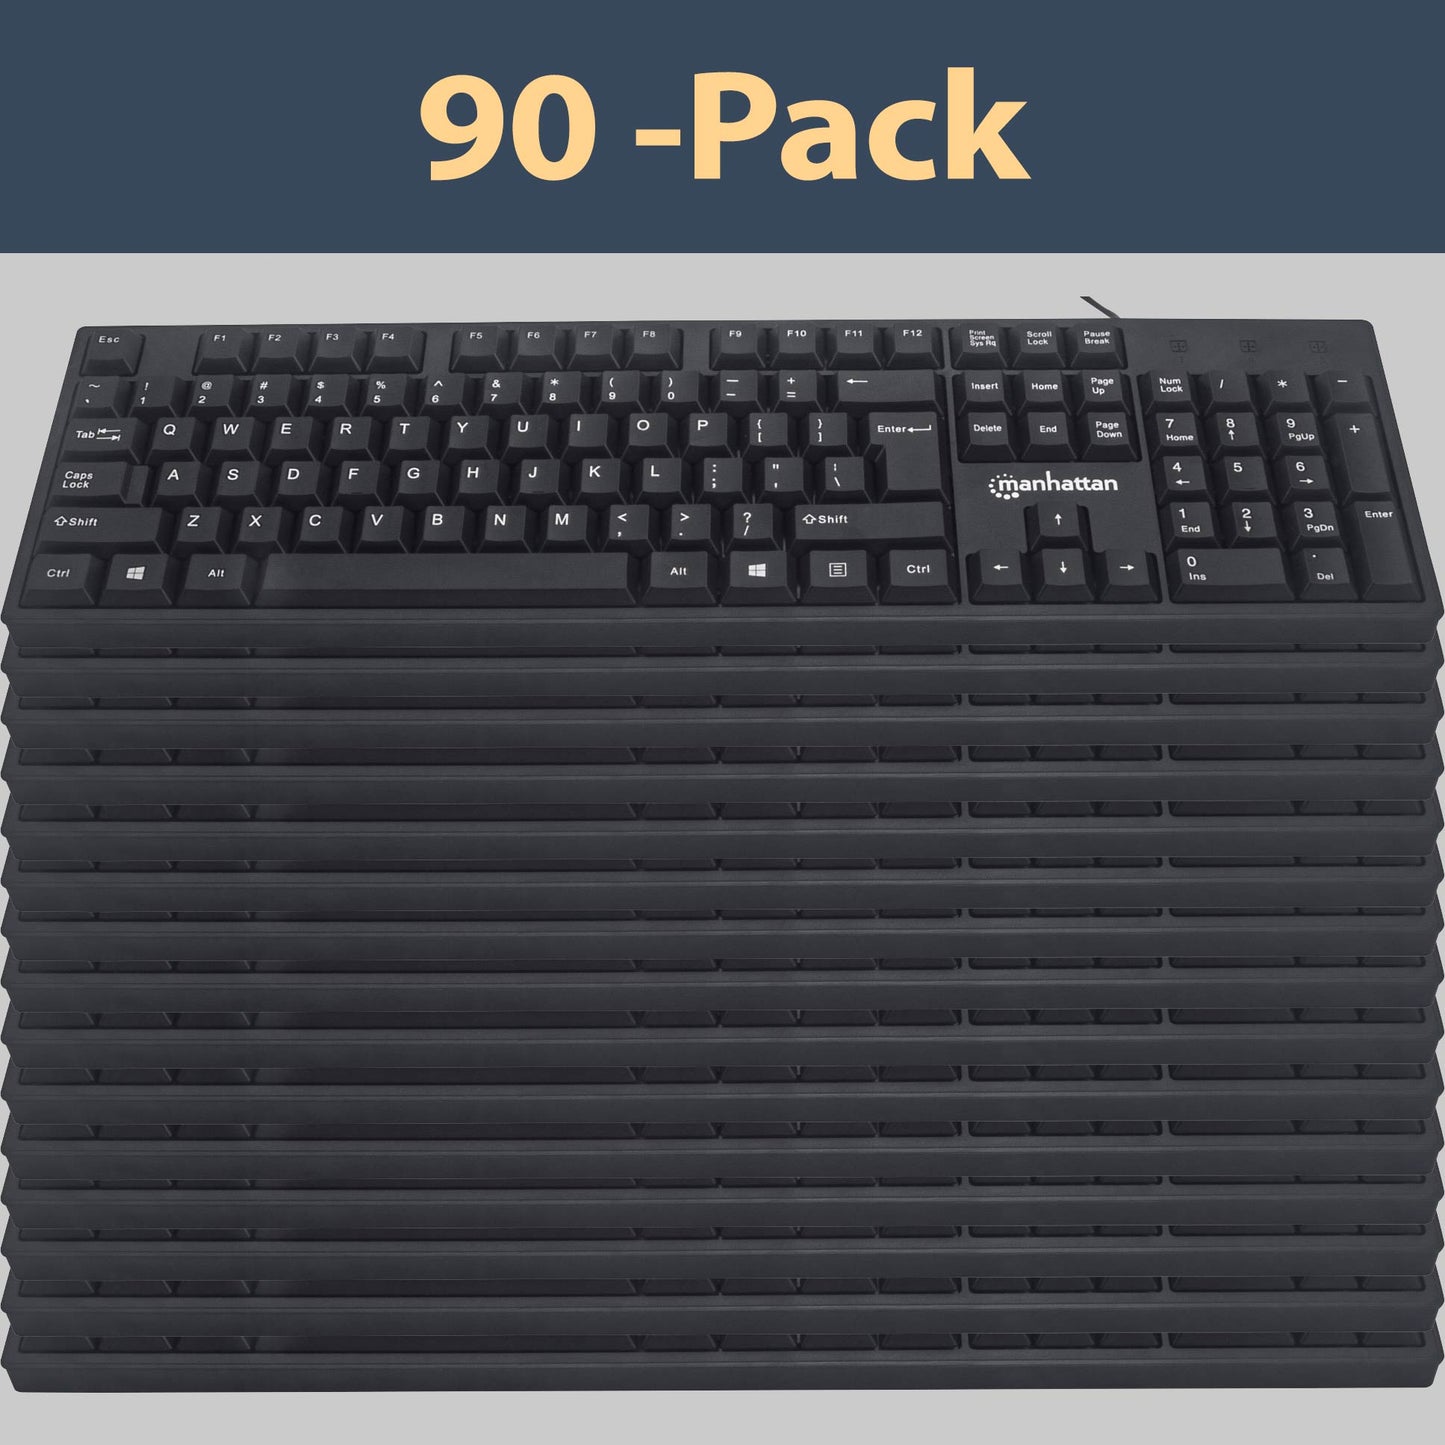 Wired Computer Full Size USB Keyboard, Bulk Buy, Black, for Windows, PC, Laptop - 3 Year Warranty